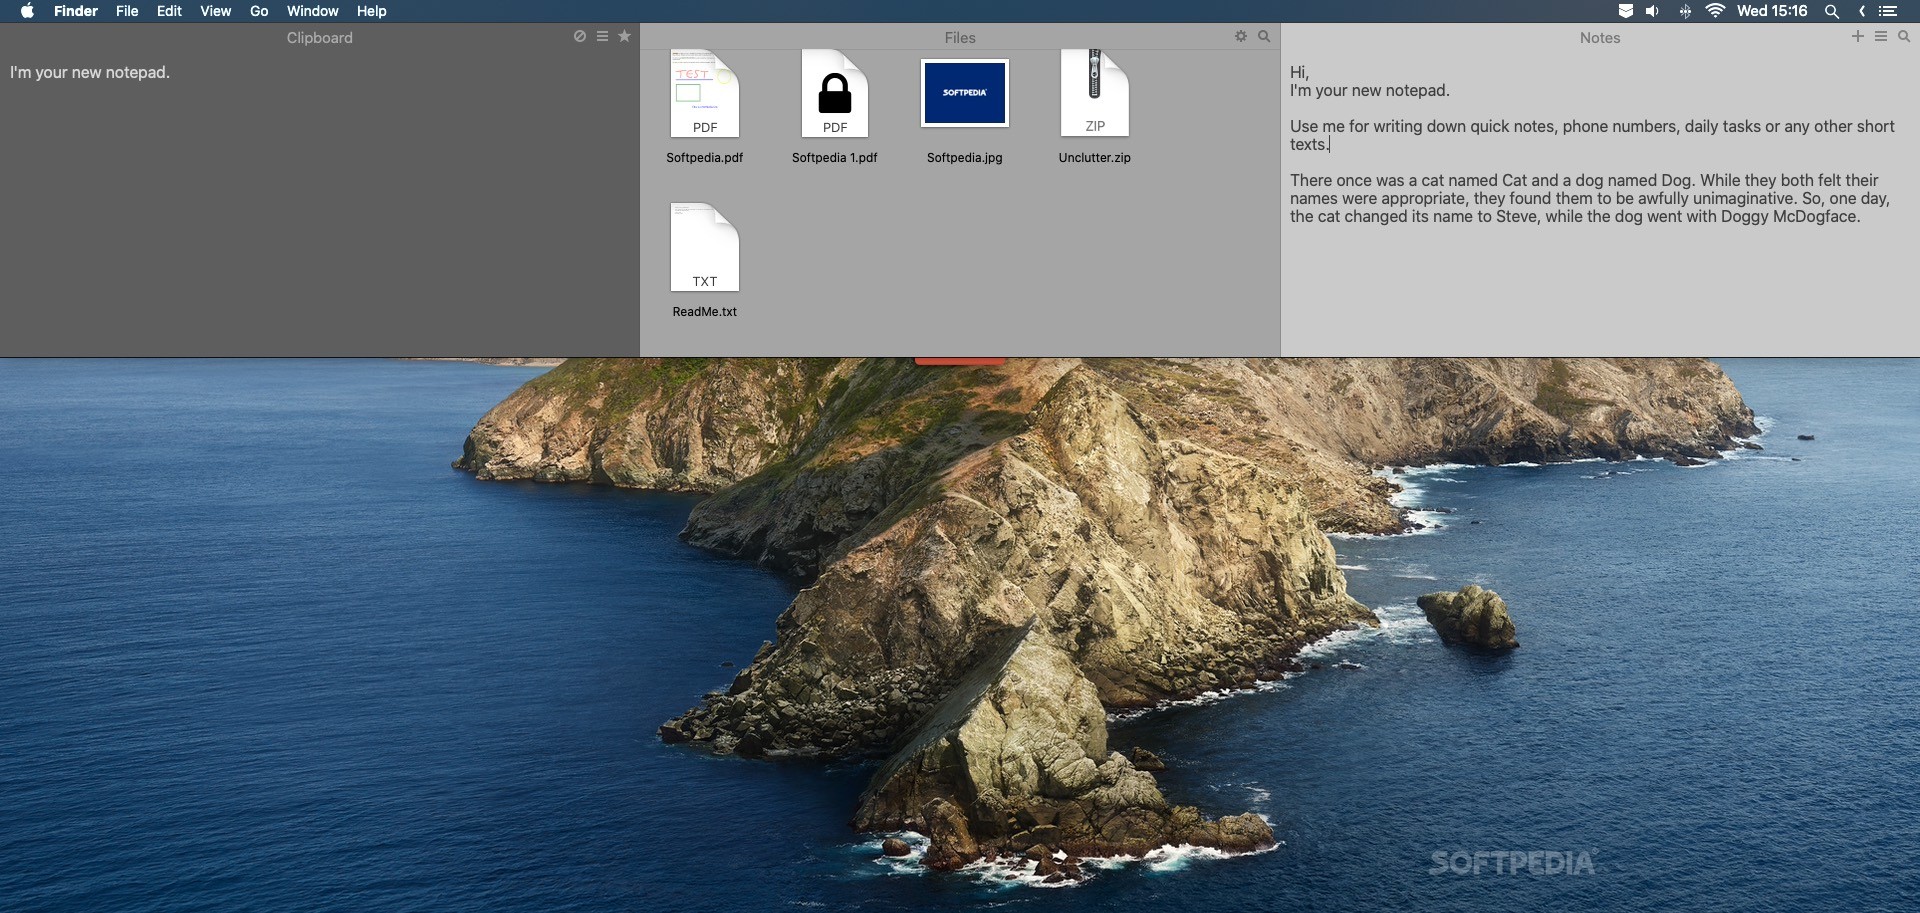 microsoft remote desktop for mac clipboard version 8.0.31